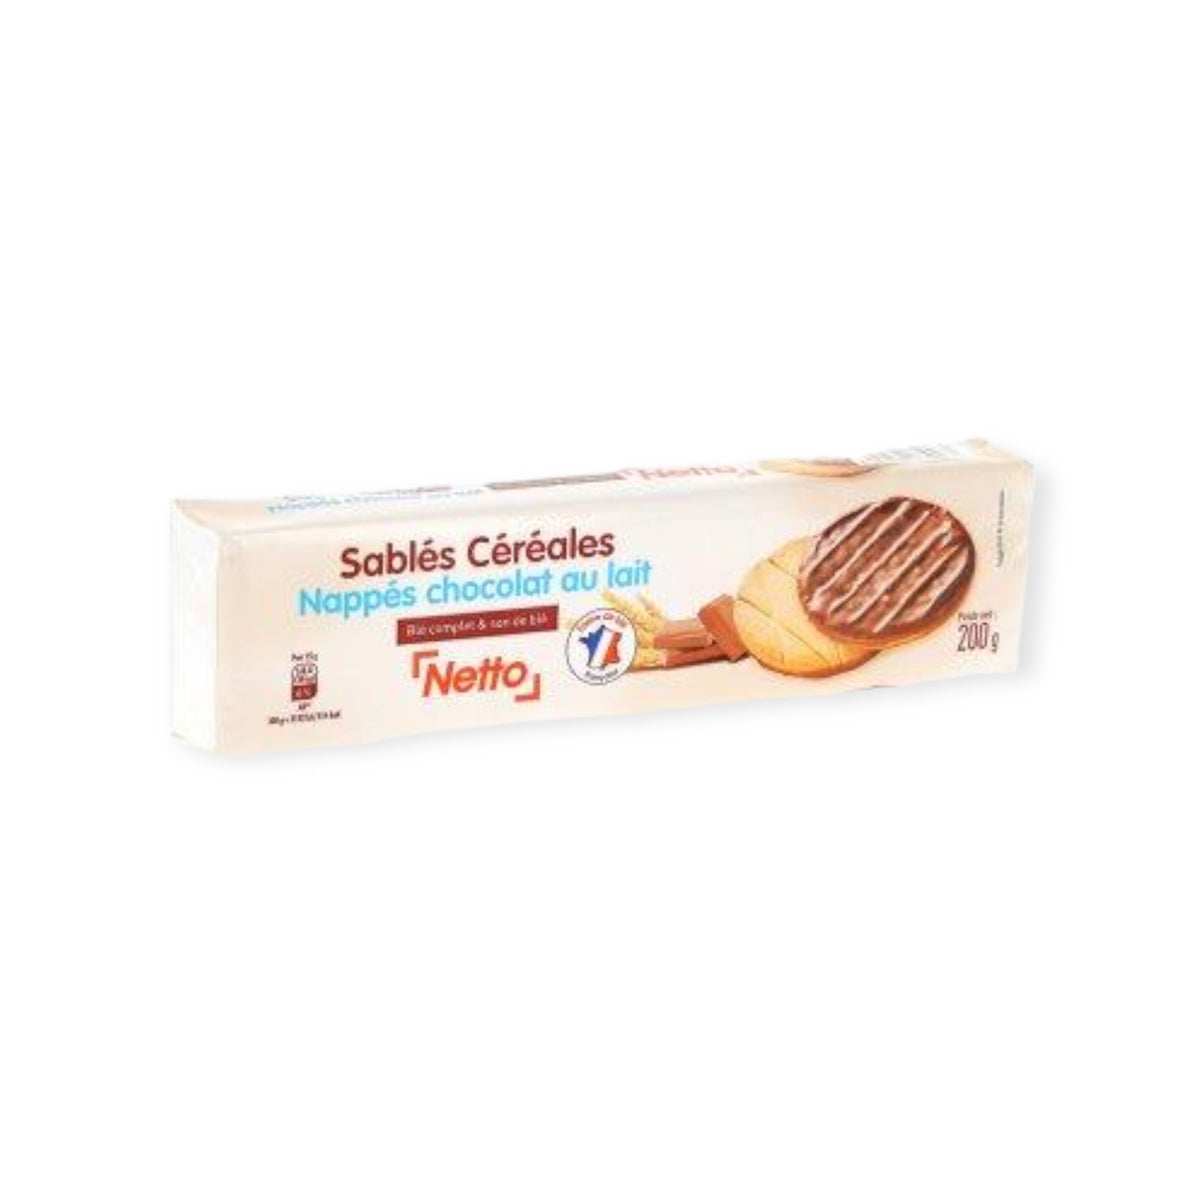 NETTO granola Shortbread milk chocolate cereals 200g BBD 04/24 - A91